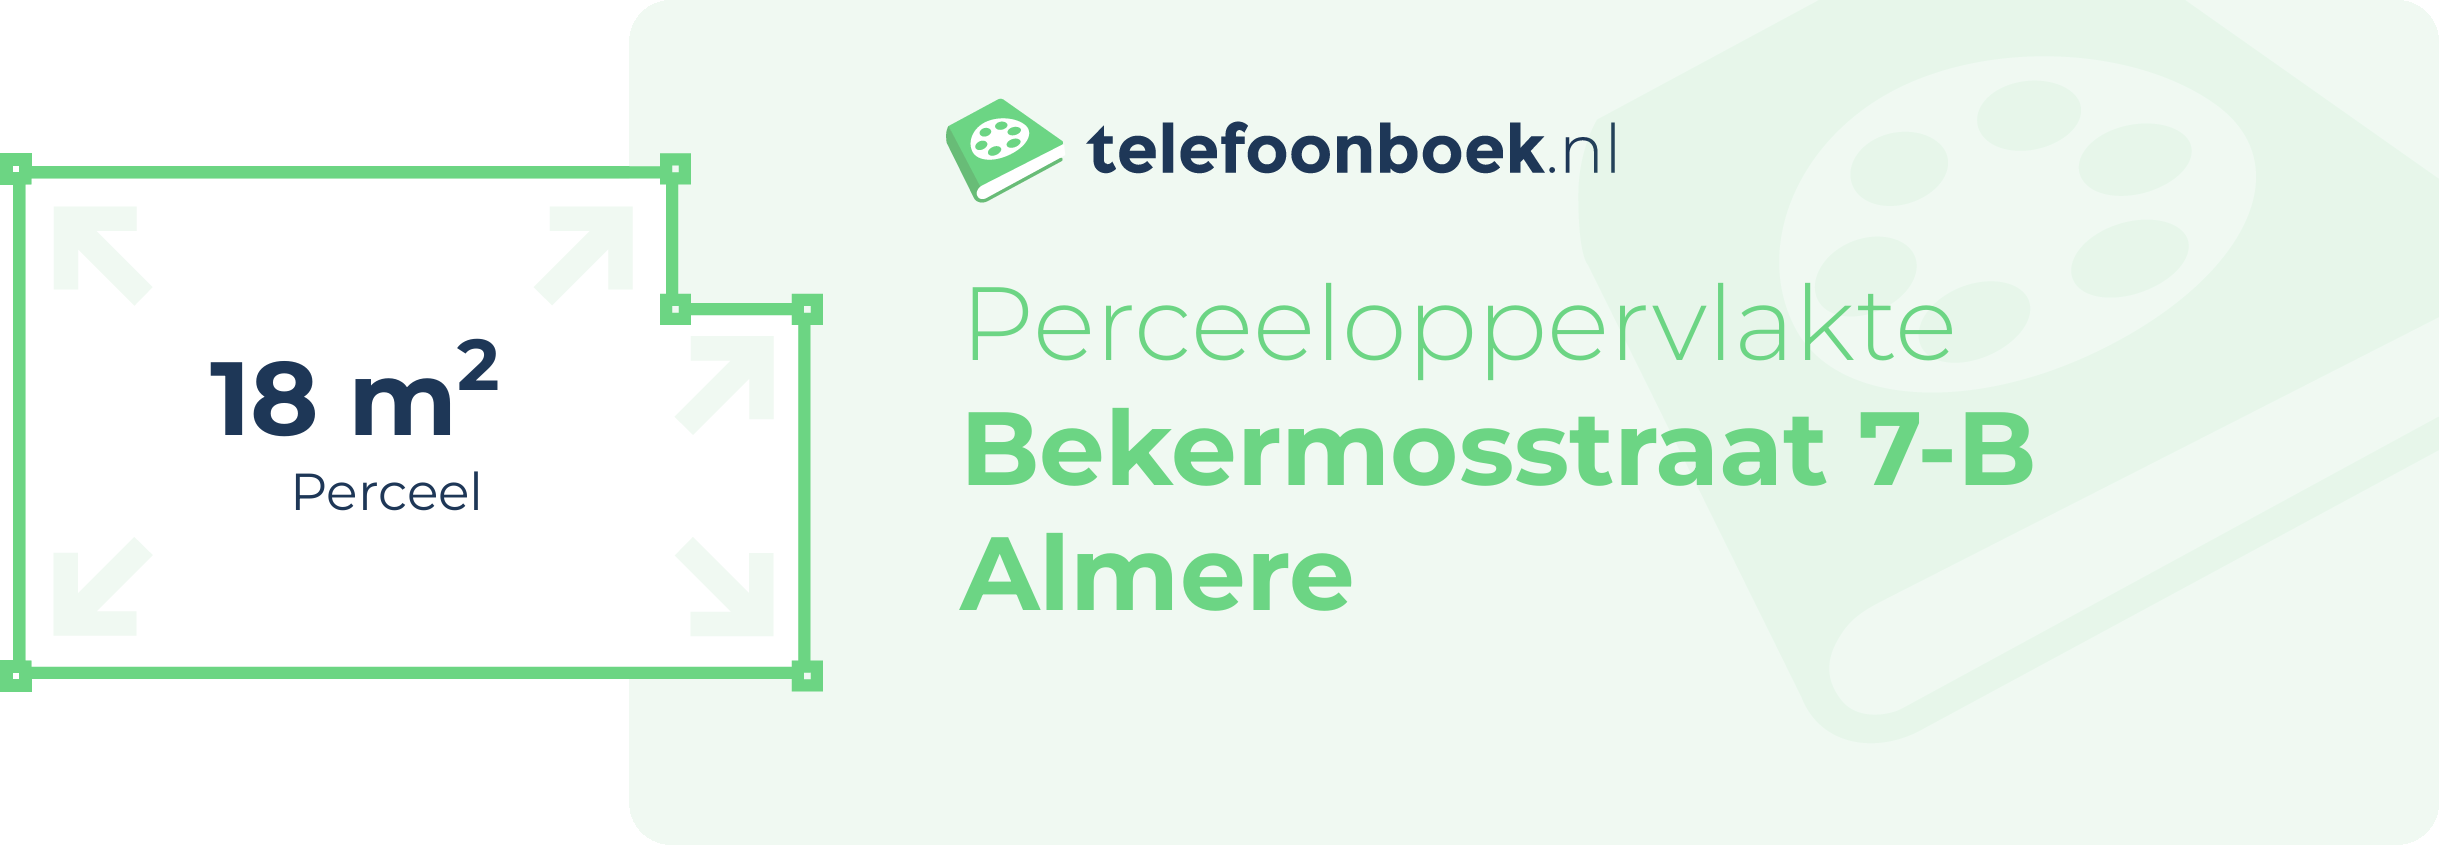 Perceeloppervlakte Bekermosstraat 7-B Almere